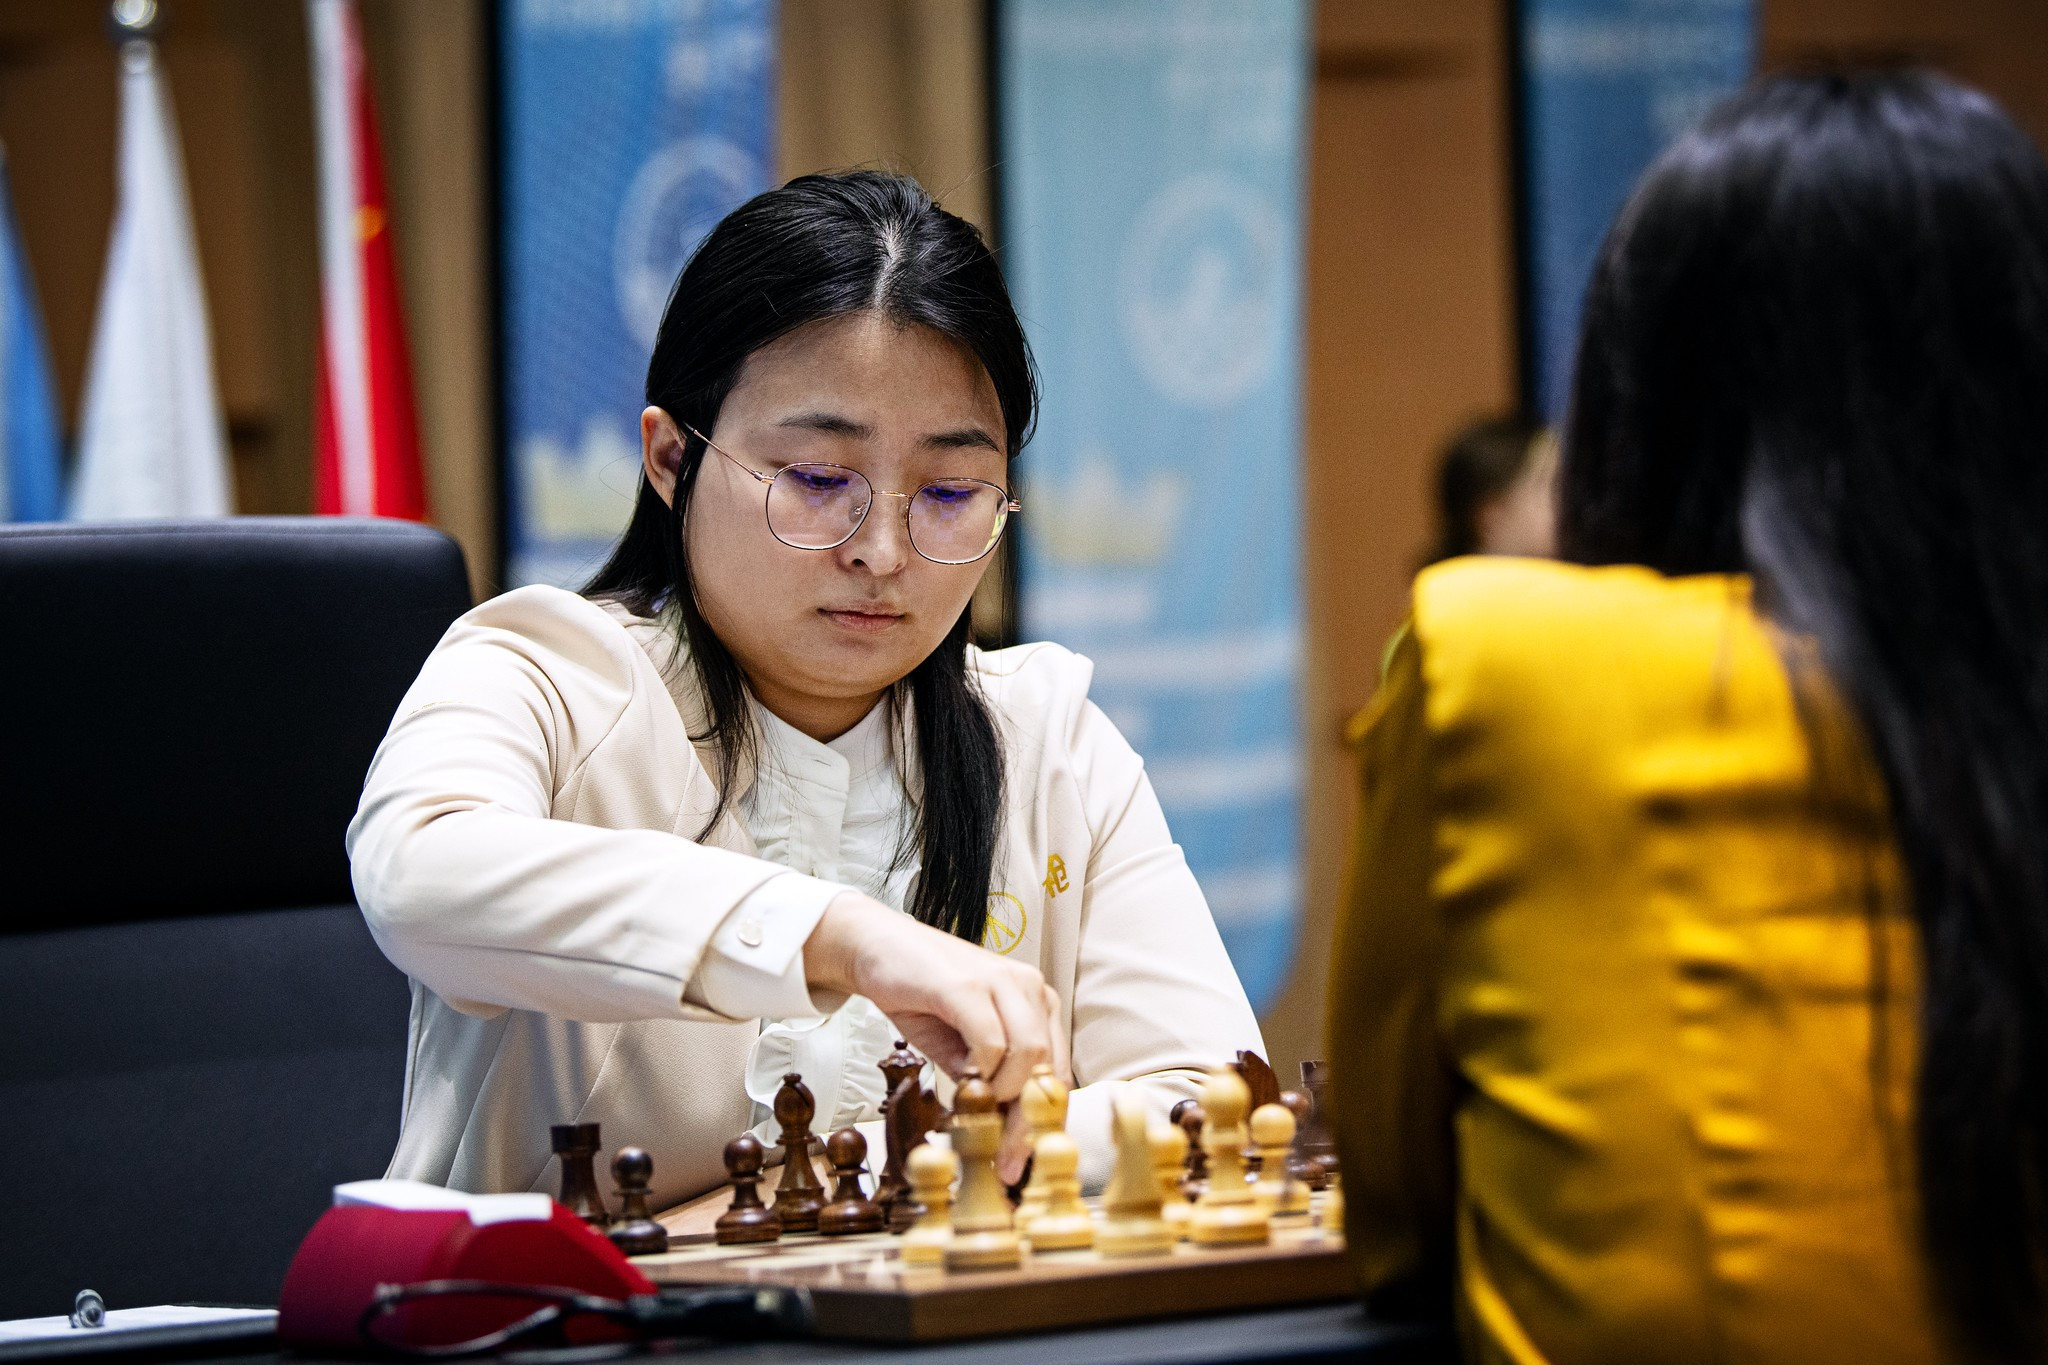 Game 7, FIDE Women's World Championship, Lei Tingjie vs Ju Wenjun ½